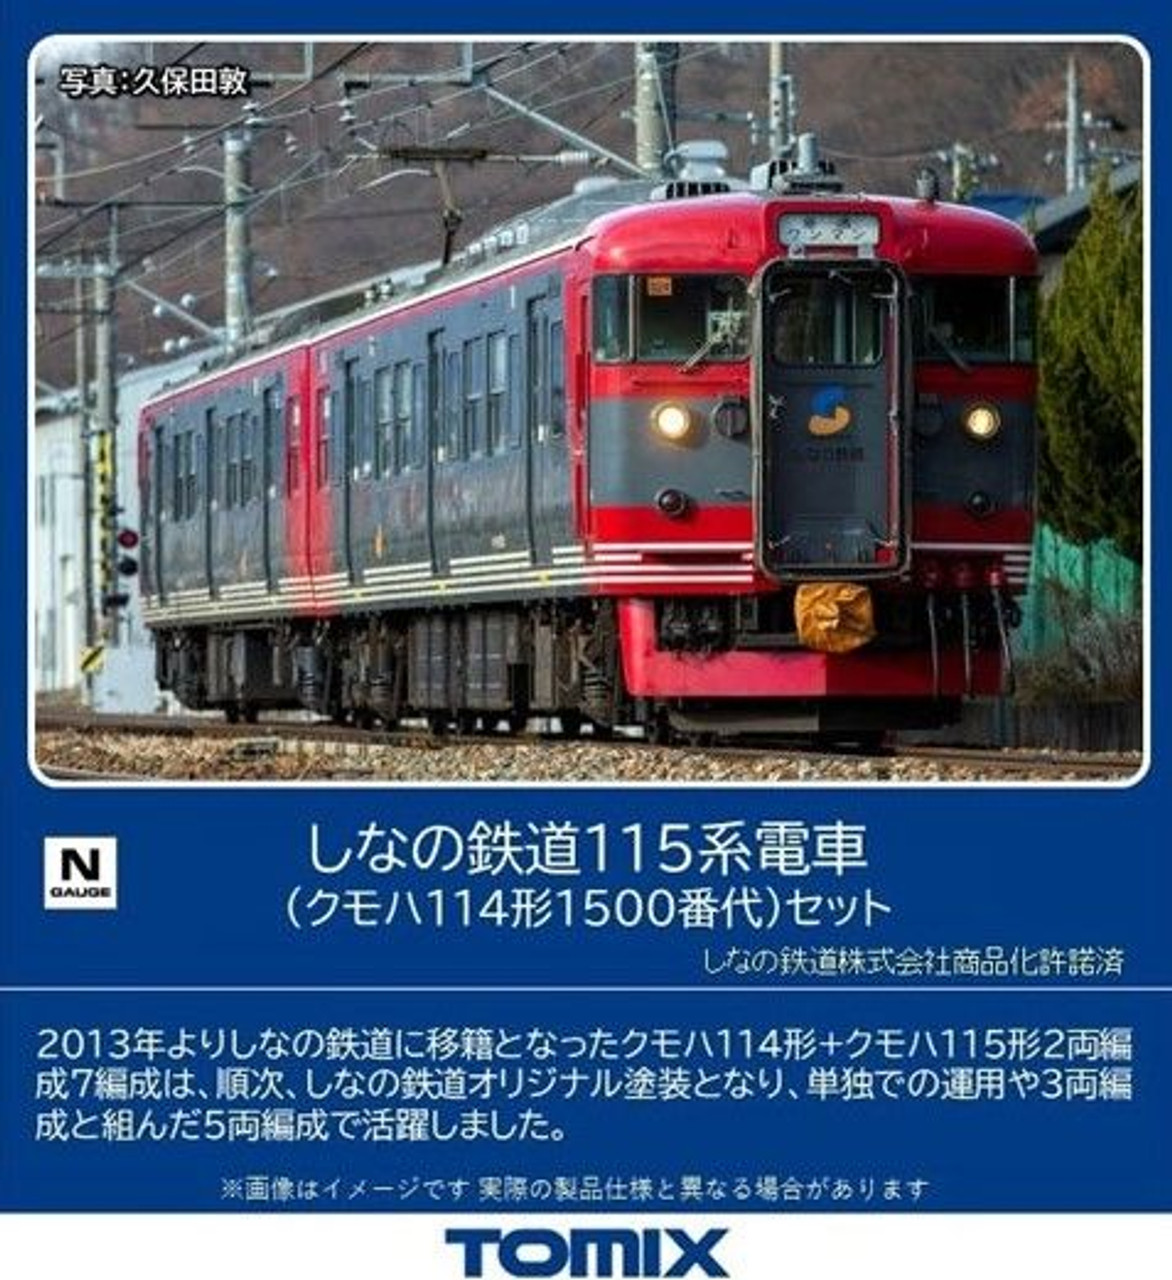 98126 Shinano Railway Series 115 (Type KUMOHA 114-1500) 2 Cars Set